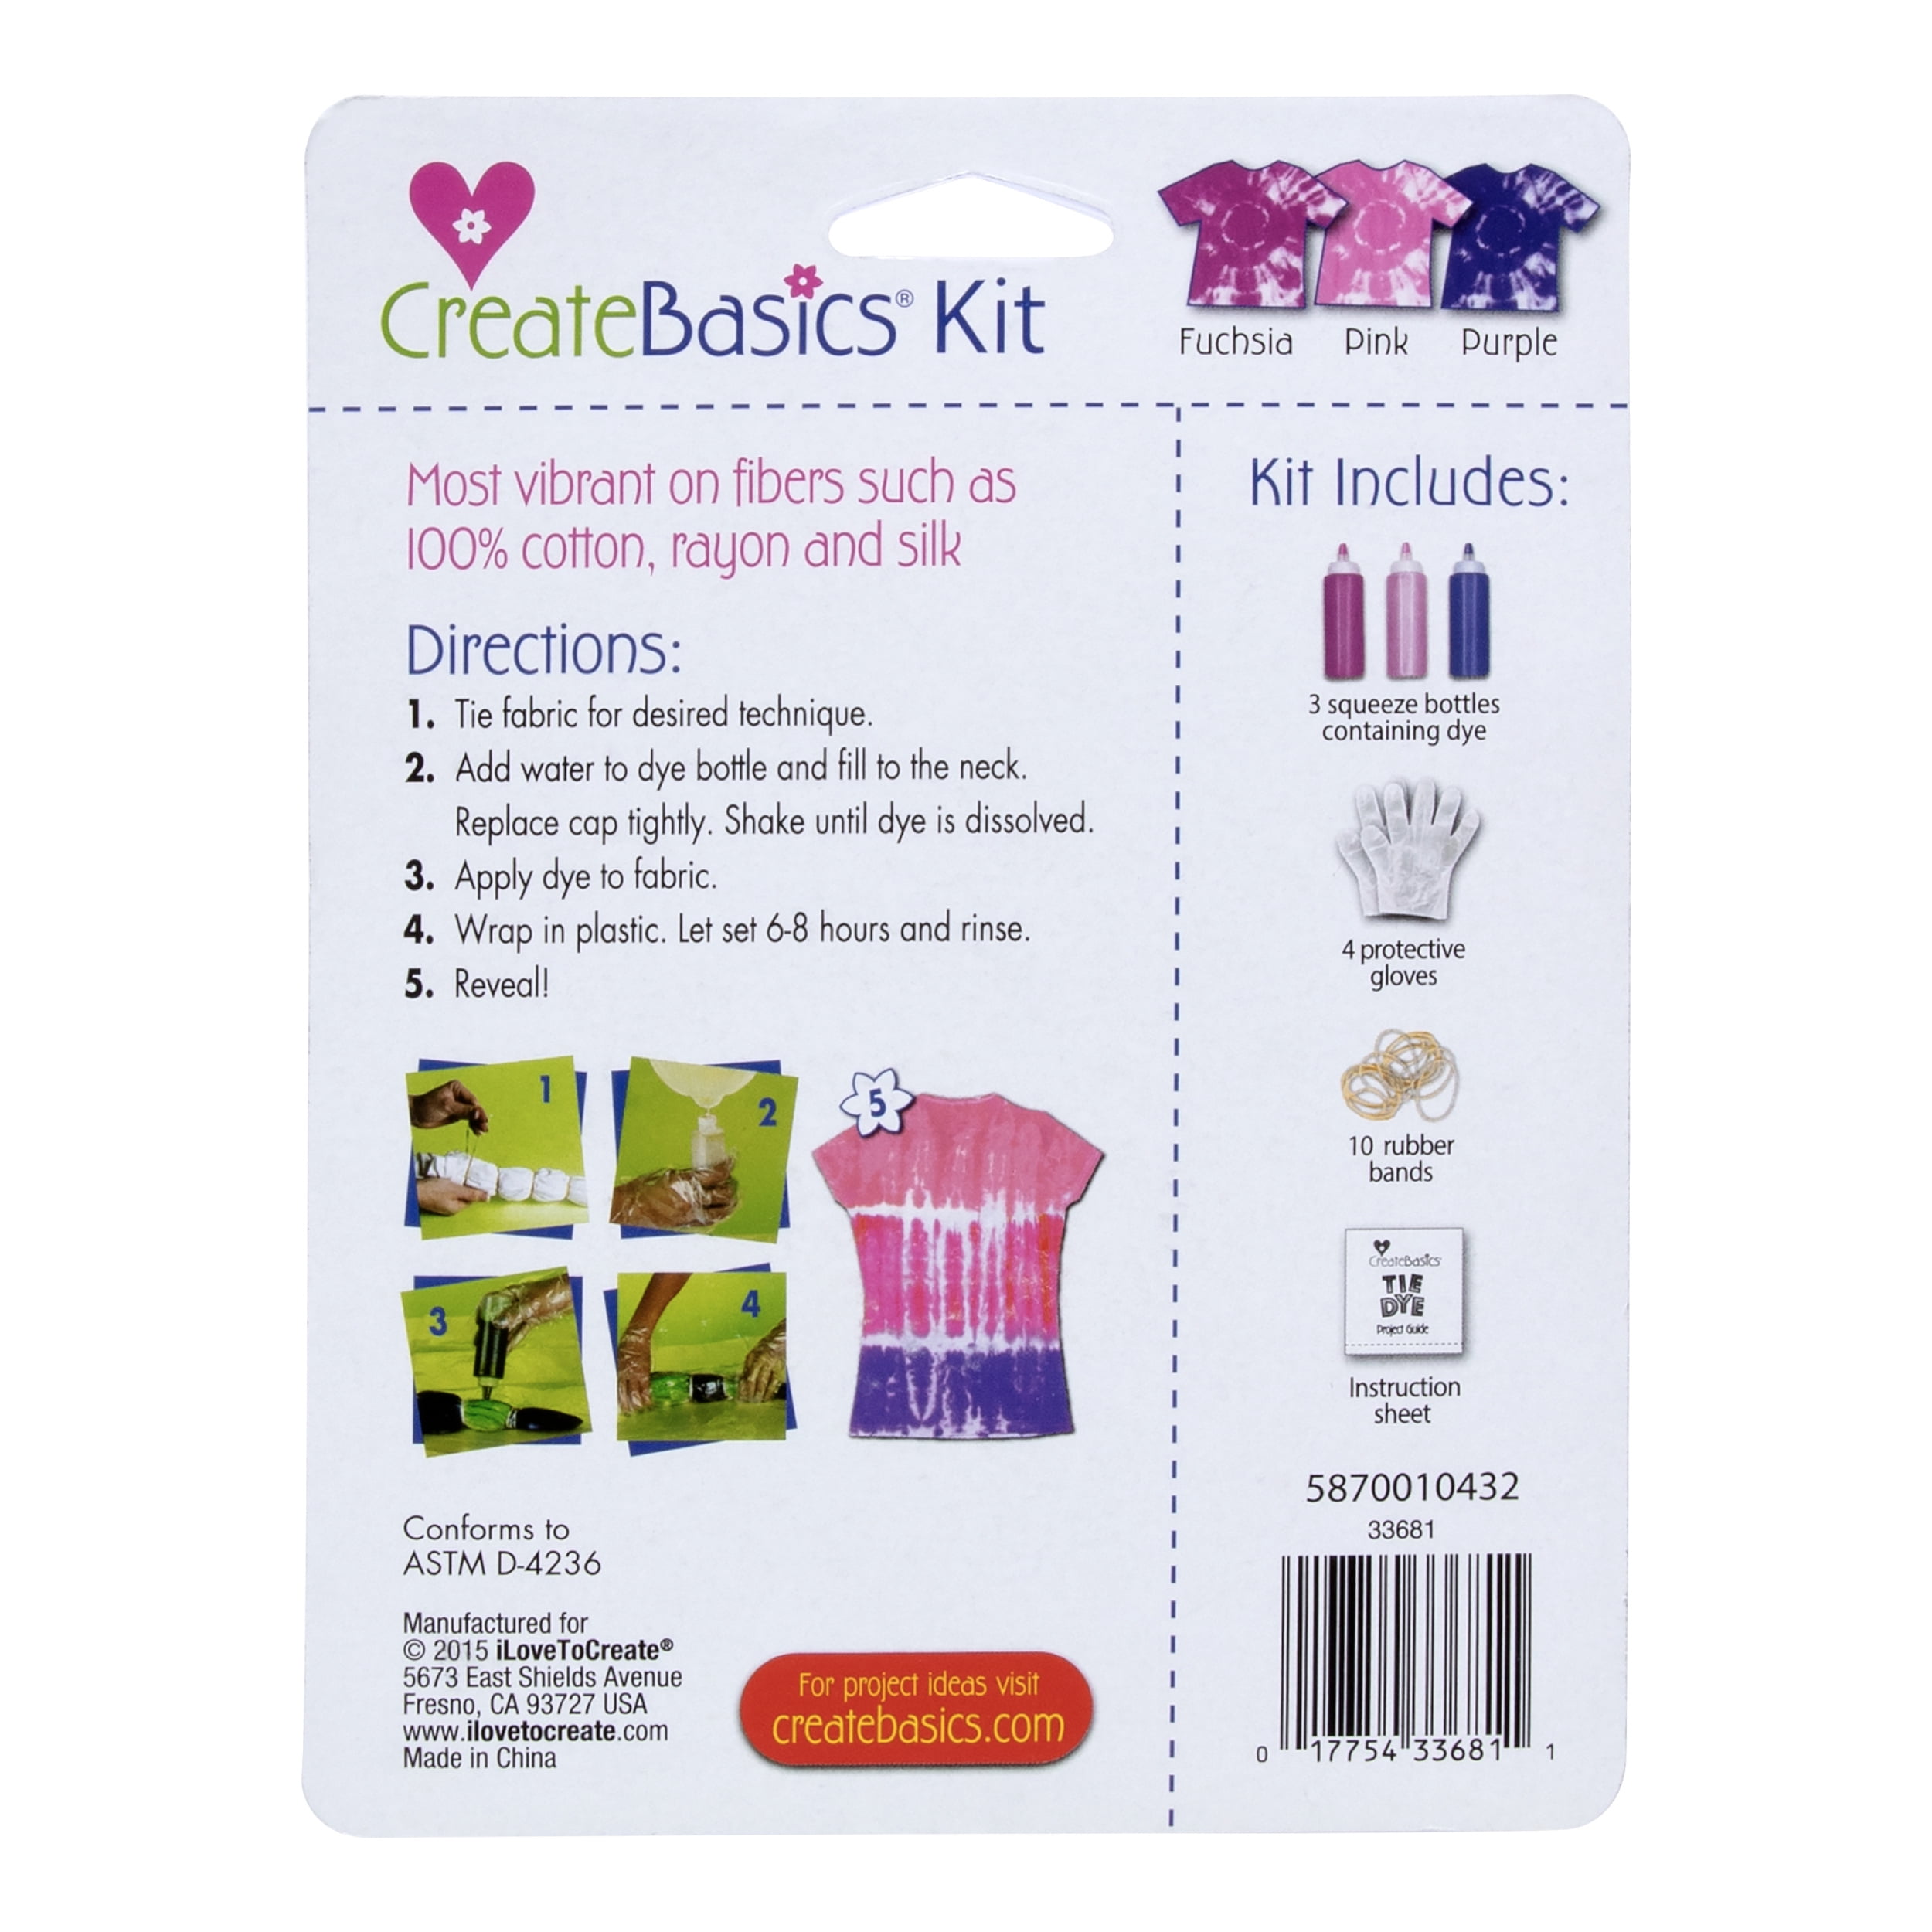 Create Basics 3 Color Tie Dye Kit Princess, Trial Size Pack